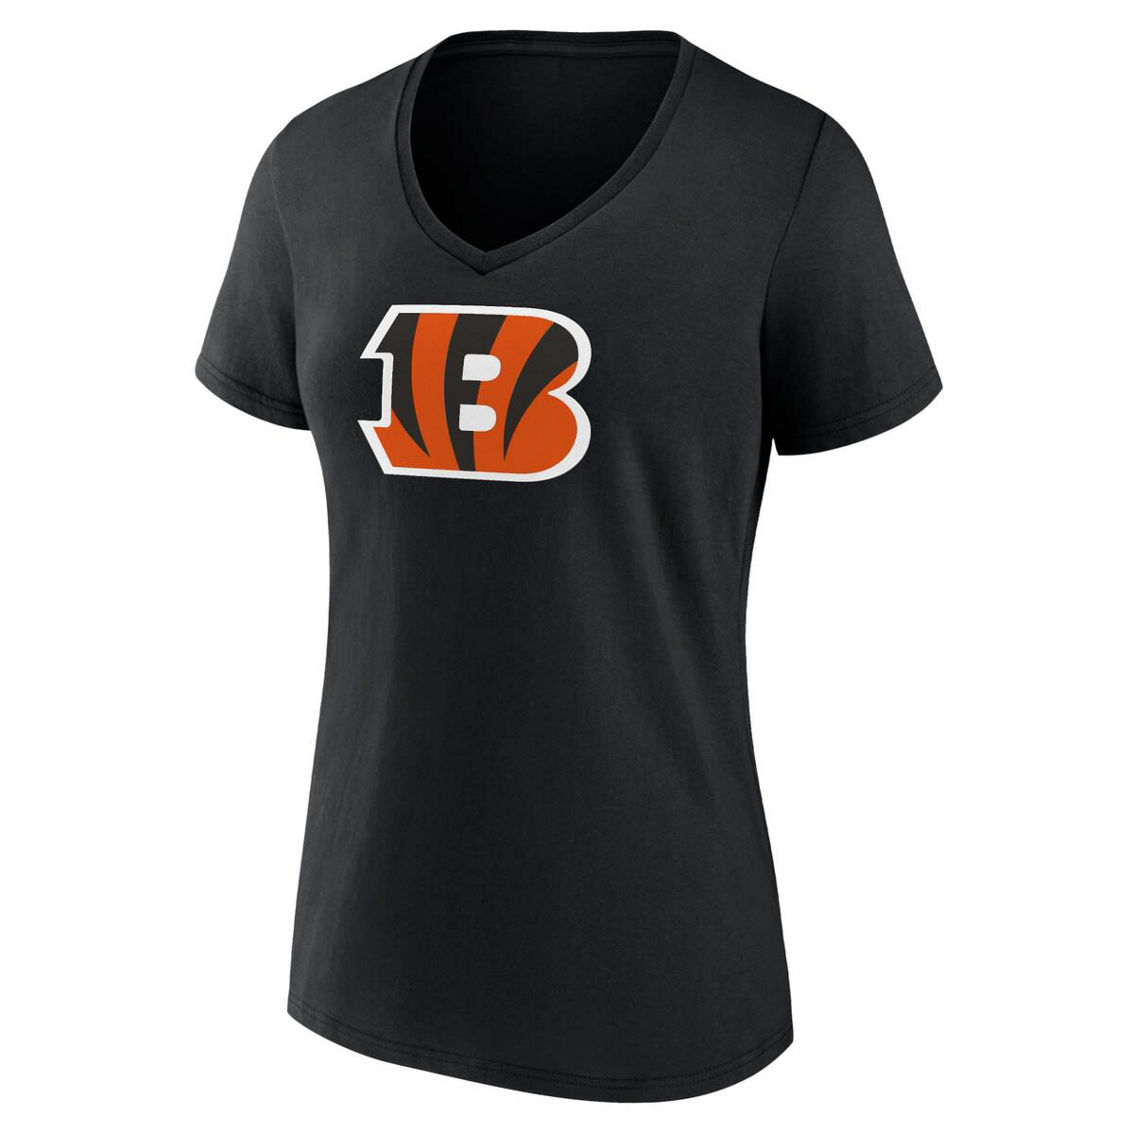 Fanatics Branded Women's Black Cincinnati Bengals Mother's Day V-Neck T-Shirt - Image 3 of 4